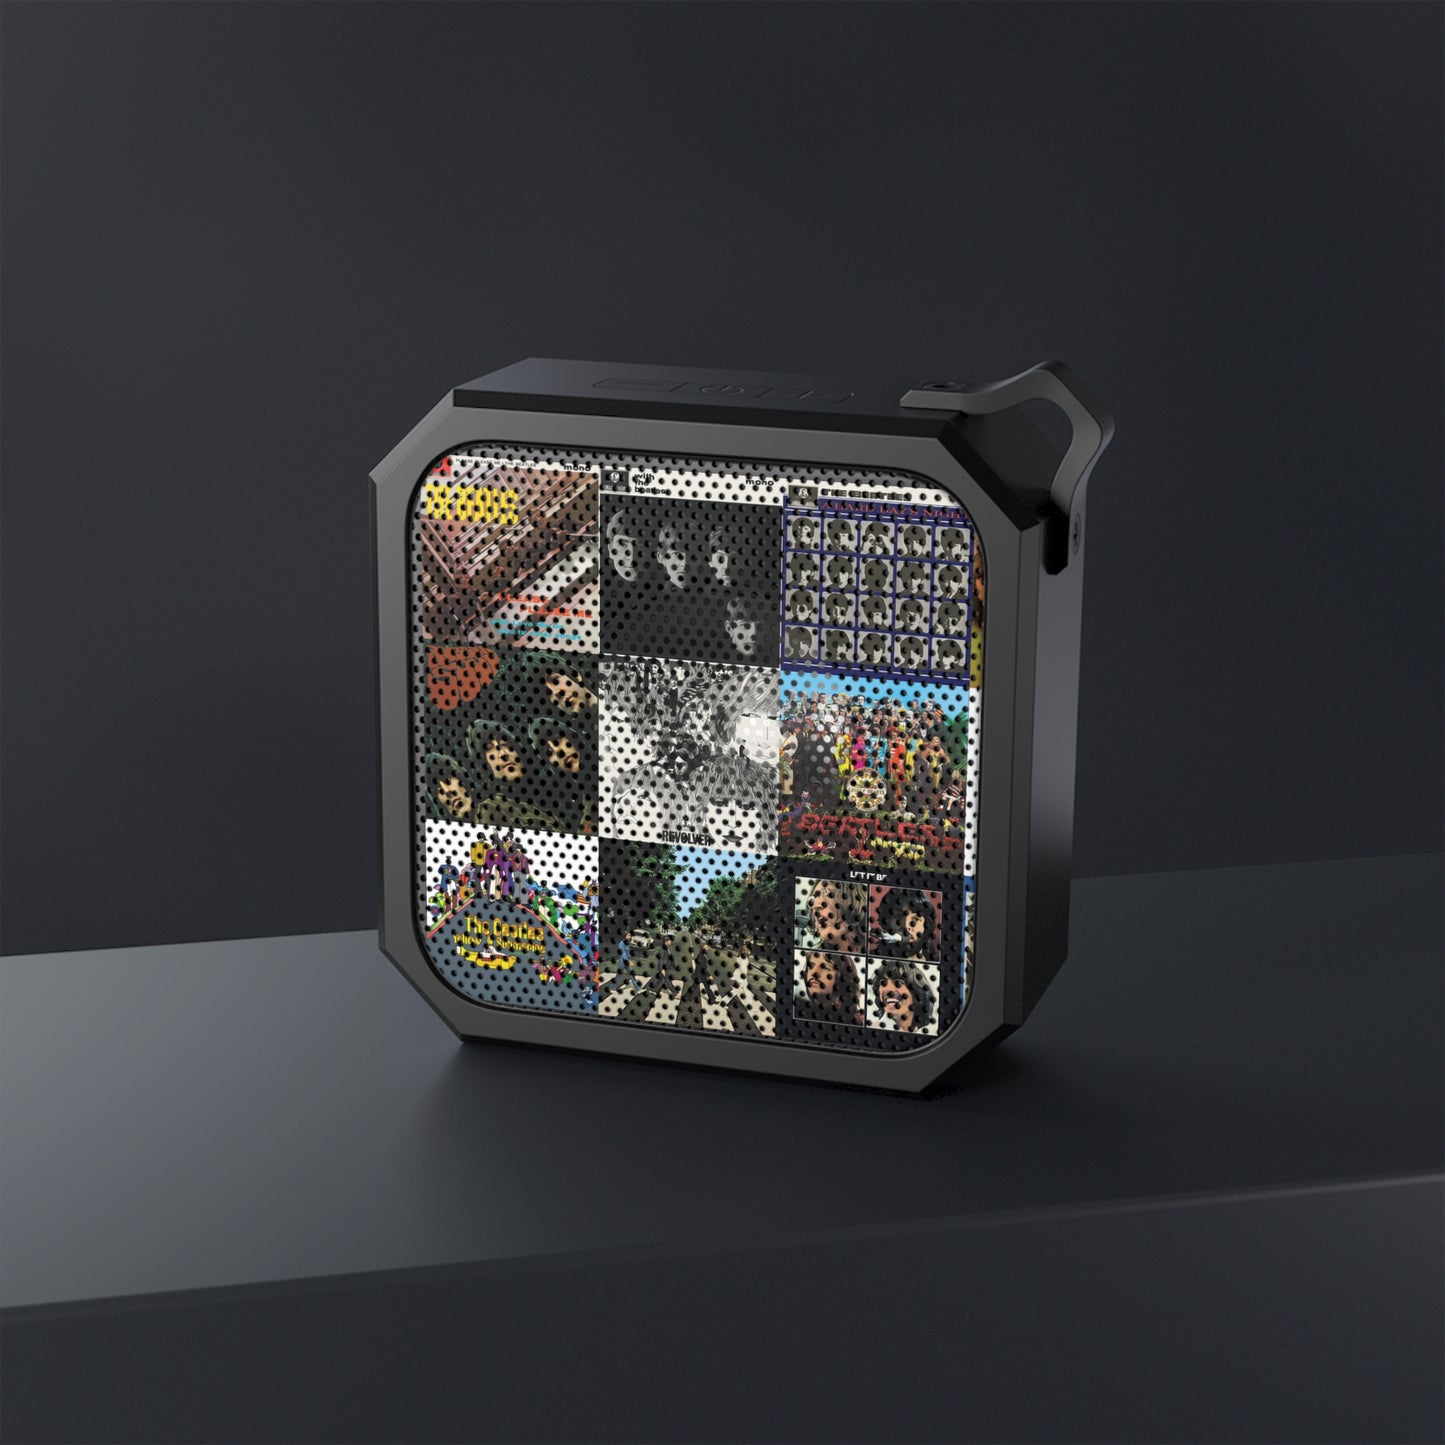 The Beatles Album Cover Collage Outdoor Bluetooth Speaker